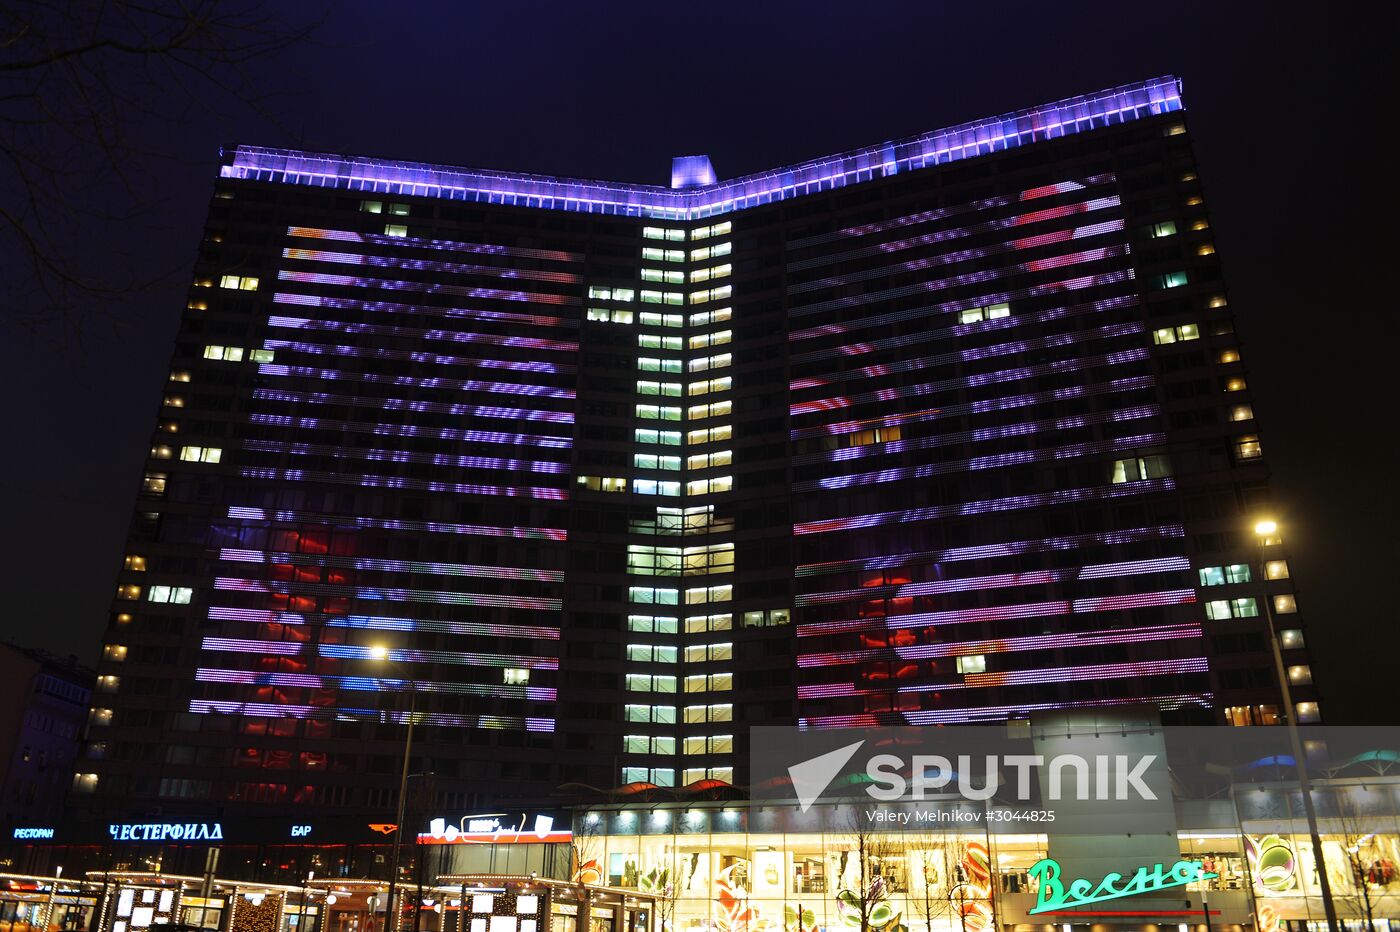 March 8th illumination on book-shaped high-rises on Novy Arbat Street